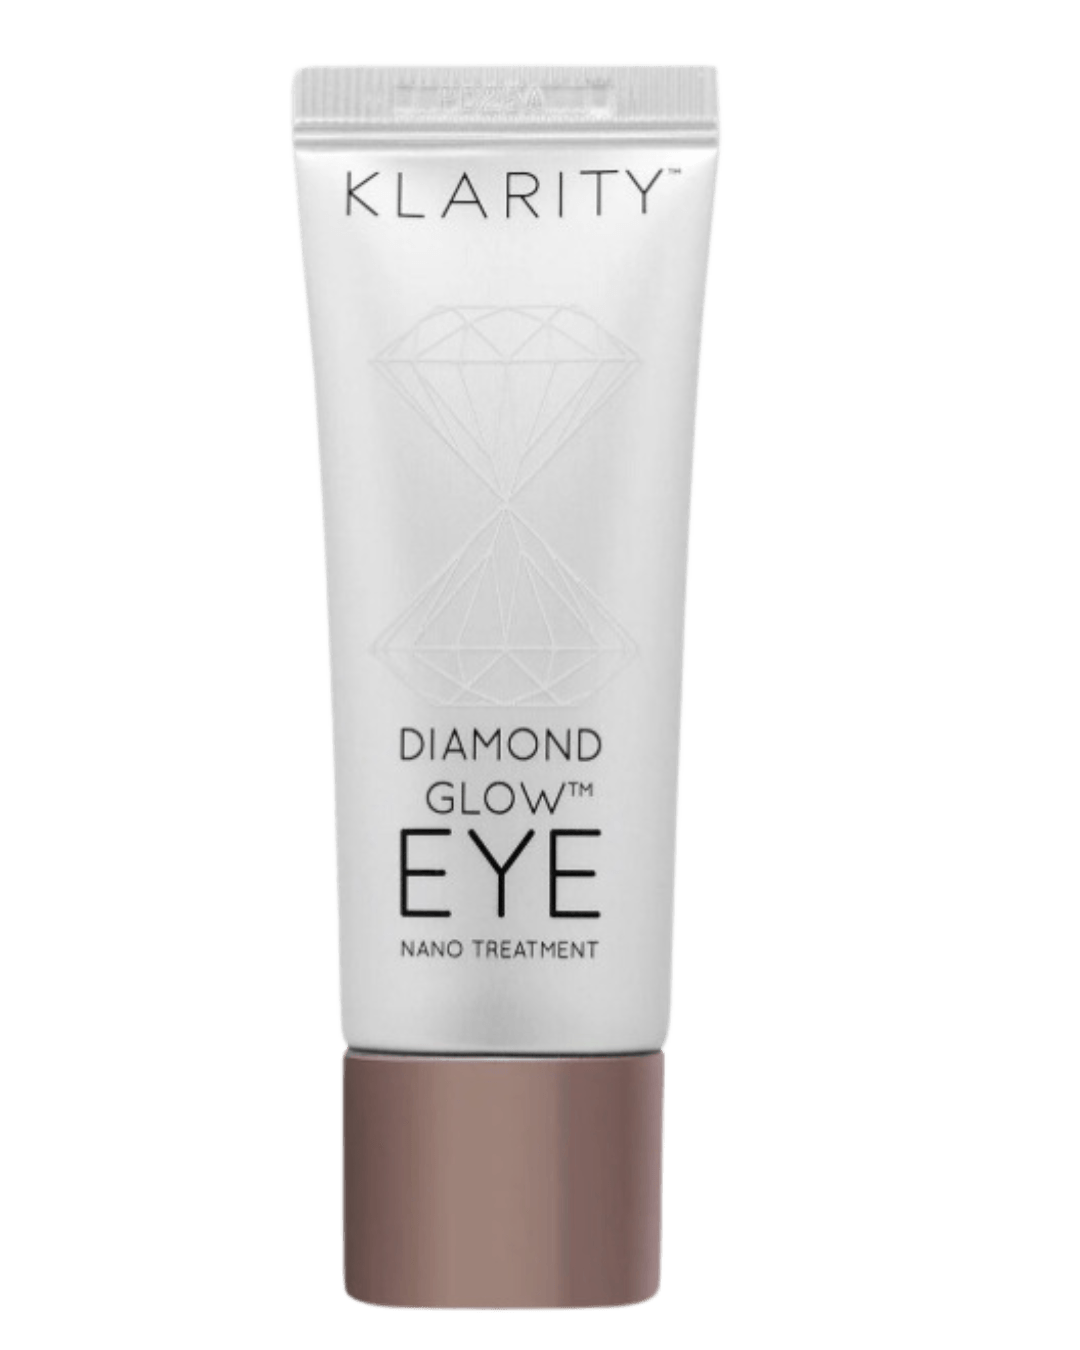 Daily Vanity Beauty Awards 2024 Best Skincare Klarity Skincare Diamond Glow EYE Nano Treatment Voted By Beauty Experts